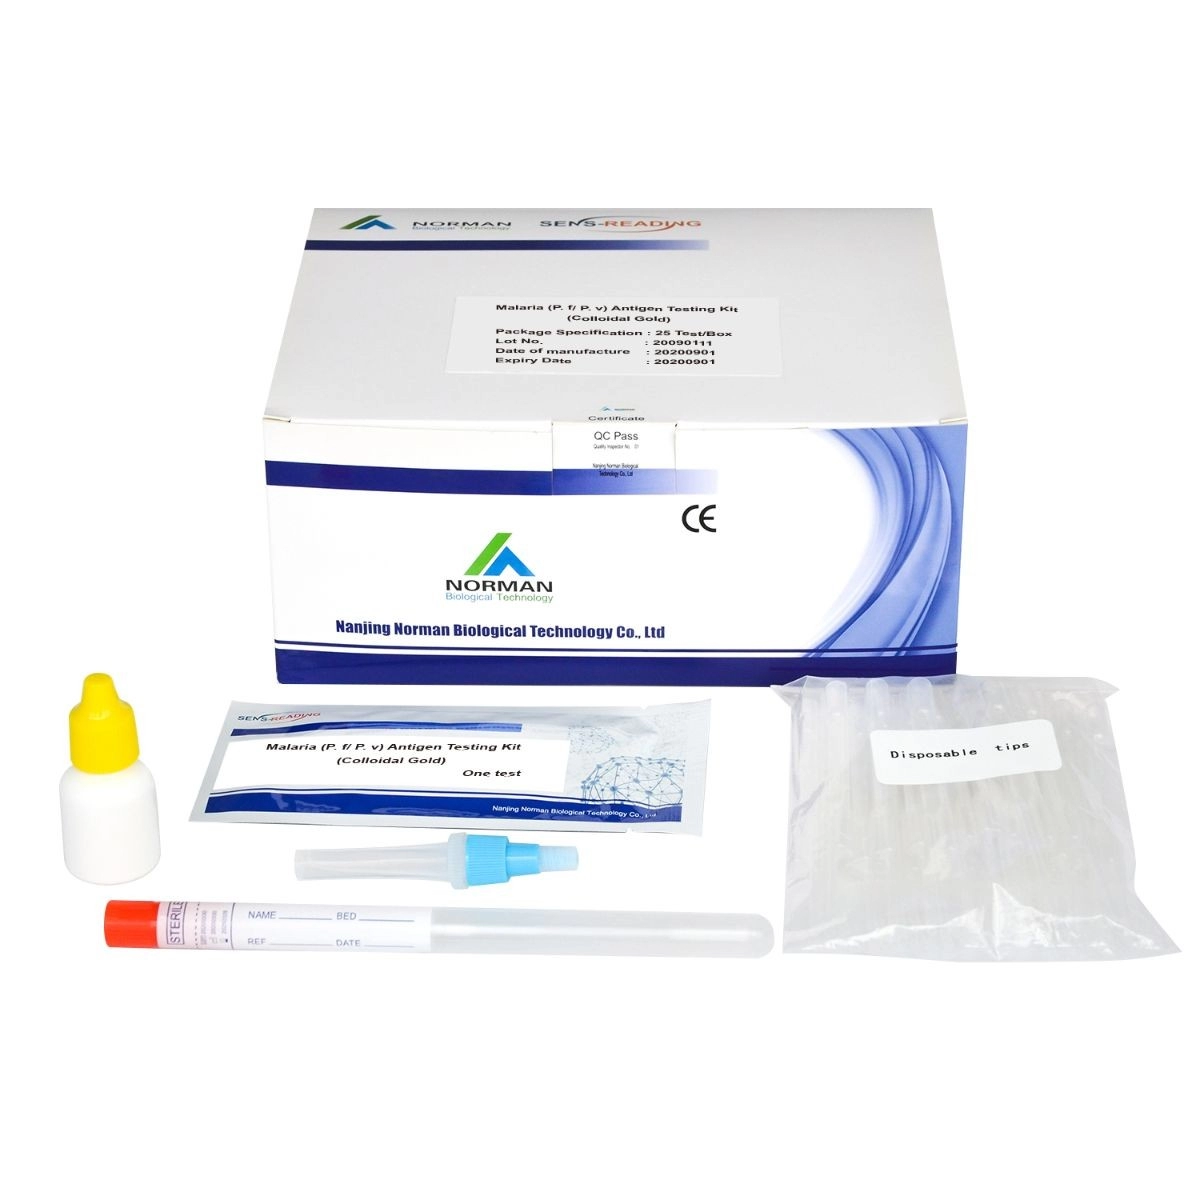 Malaria (P. f P. v) Antigen Testing Kit